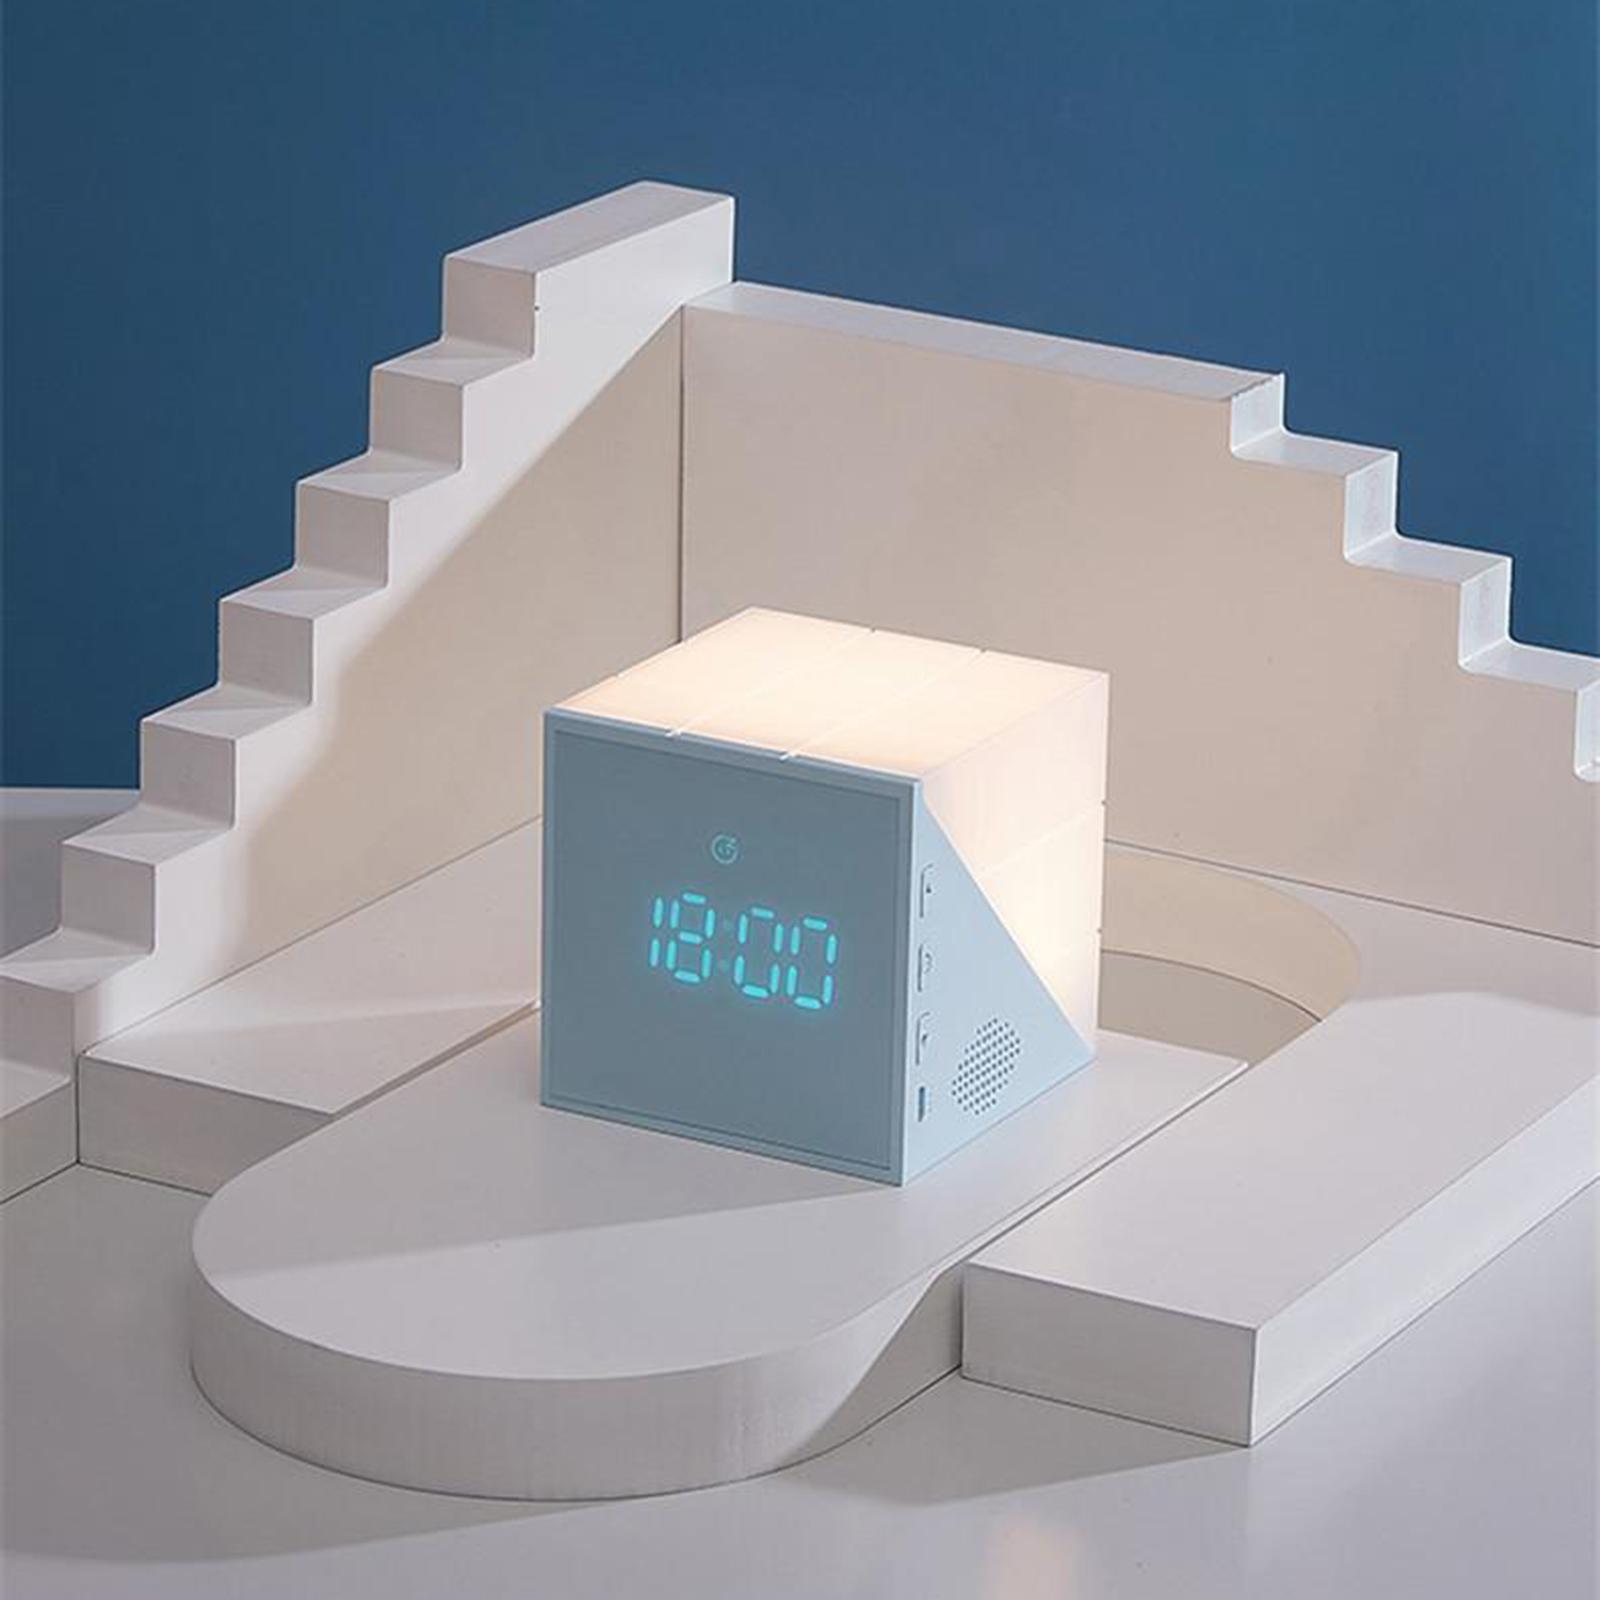 Digital Alarm Clock Sleep Training Countdown for Kids Boys Adult Bedroom